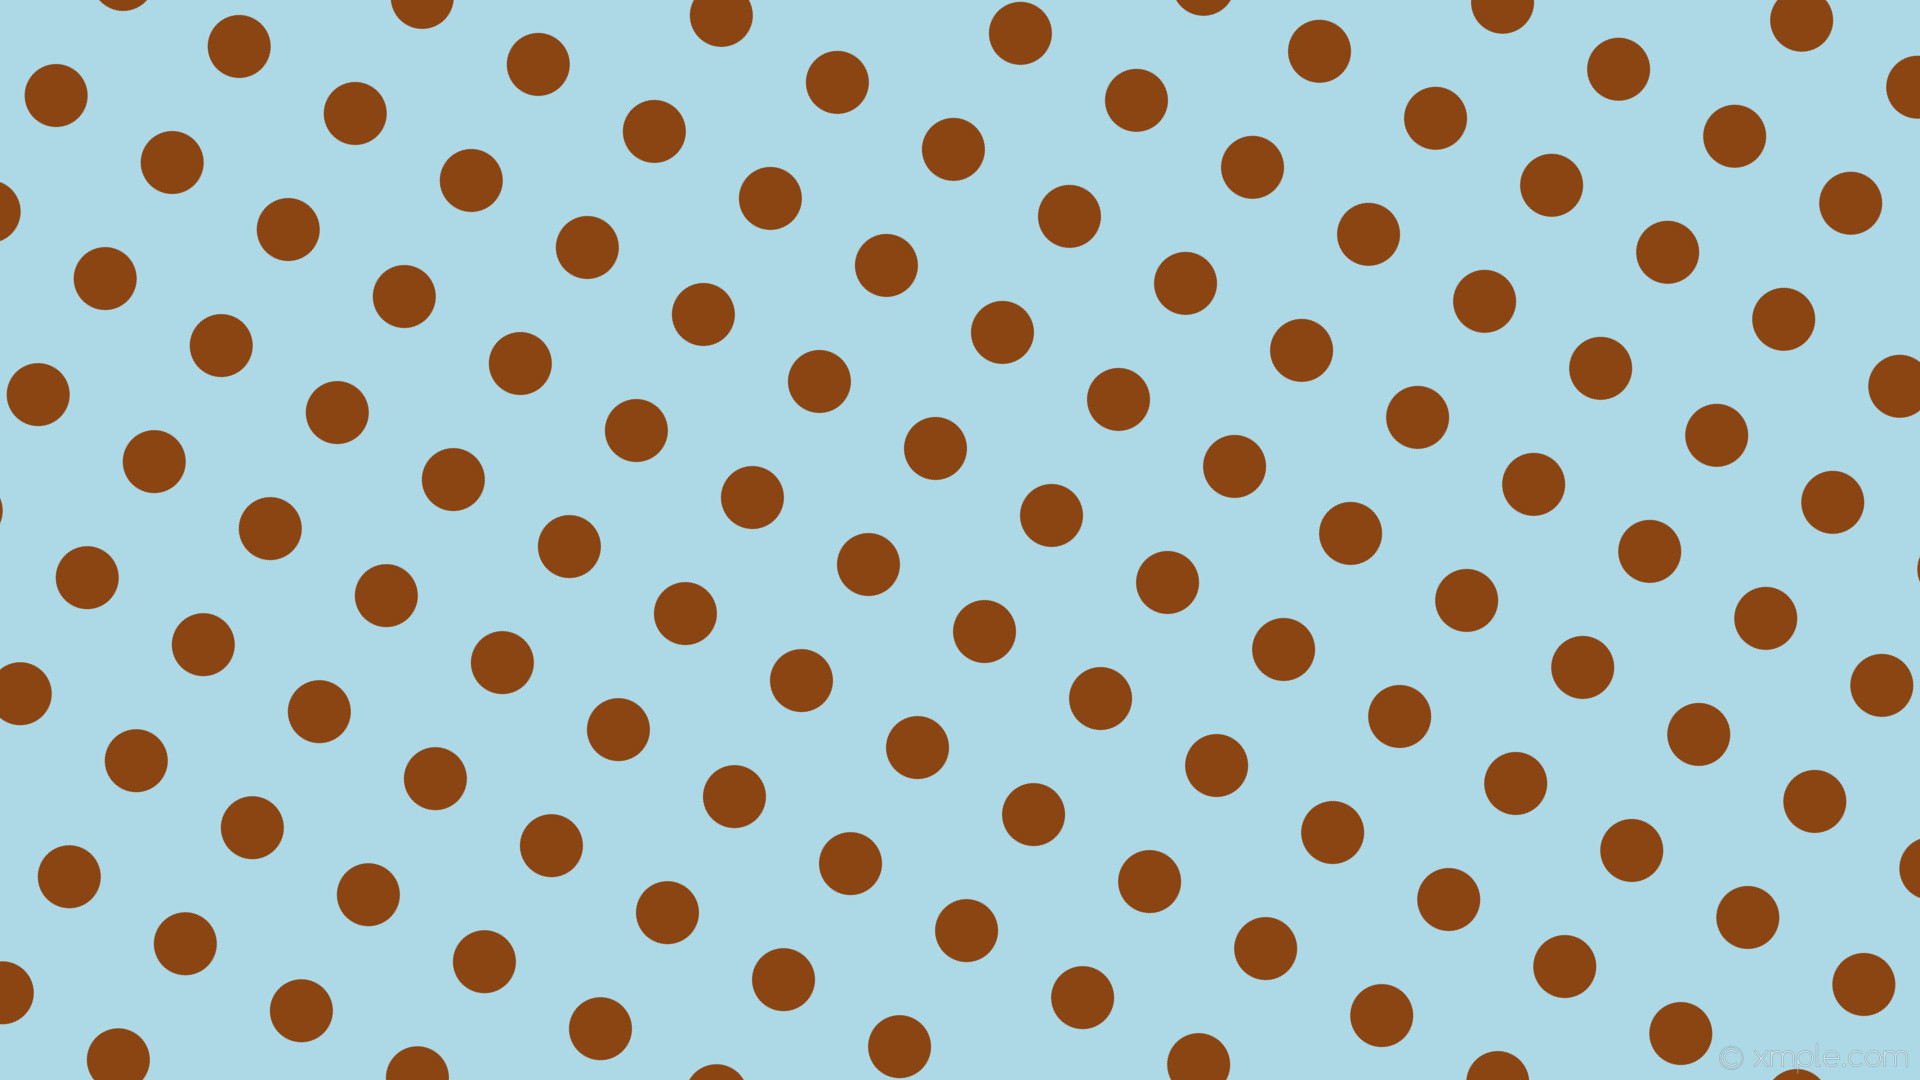 1920x1080 wallpaper brown blue spots polka dots light blue saddle brown #add8e6  #8b4513 150Â°